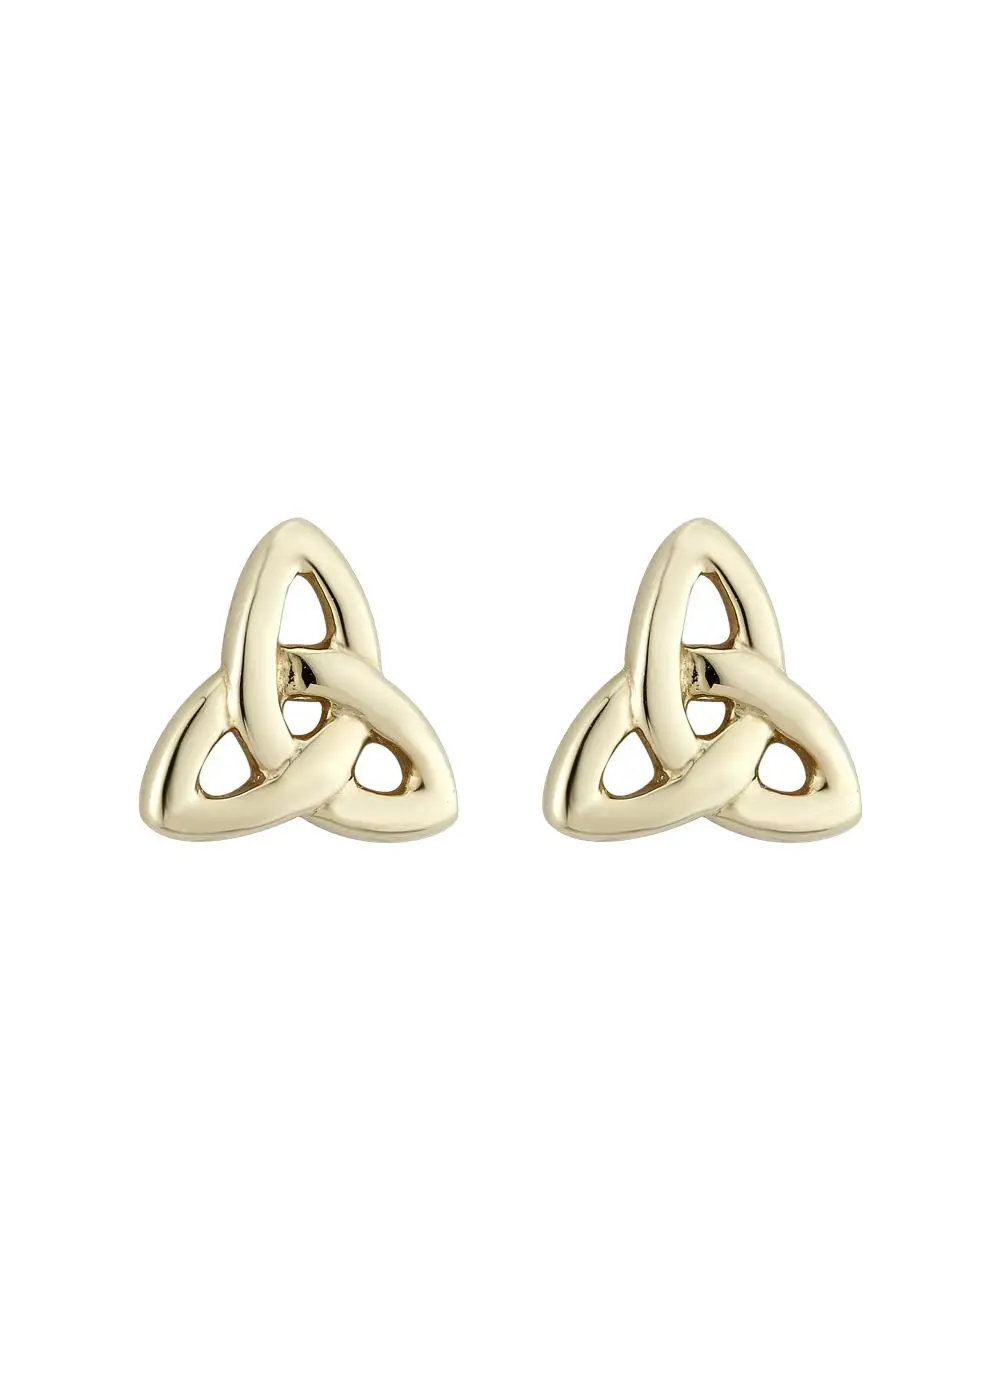 14K Gold Trinity Knot Small Stud Earrings | Blarney